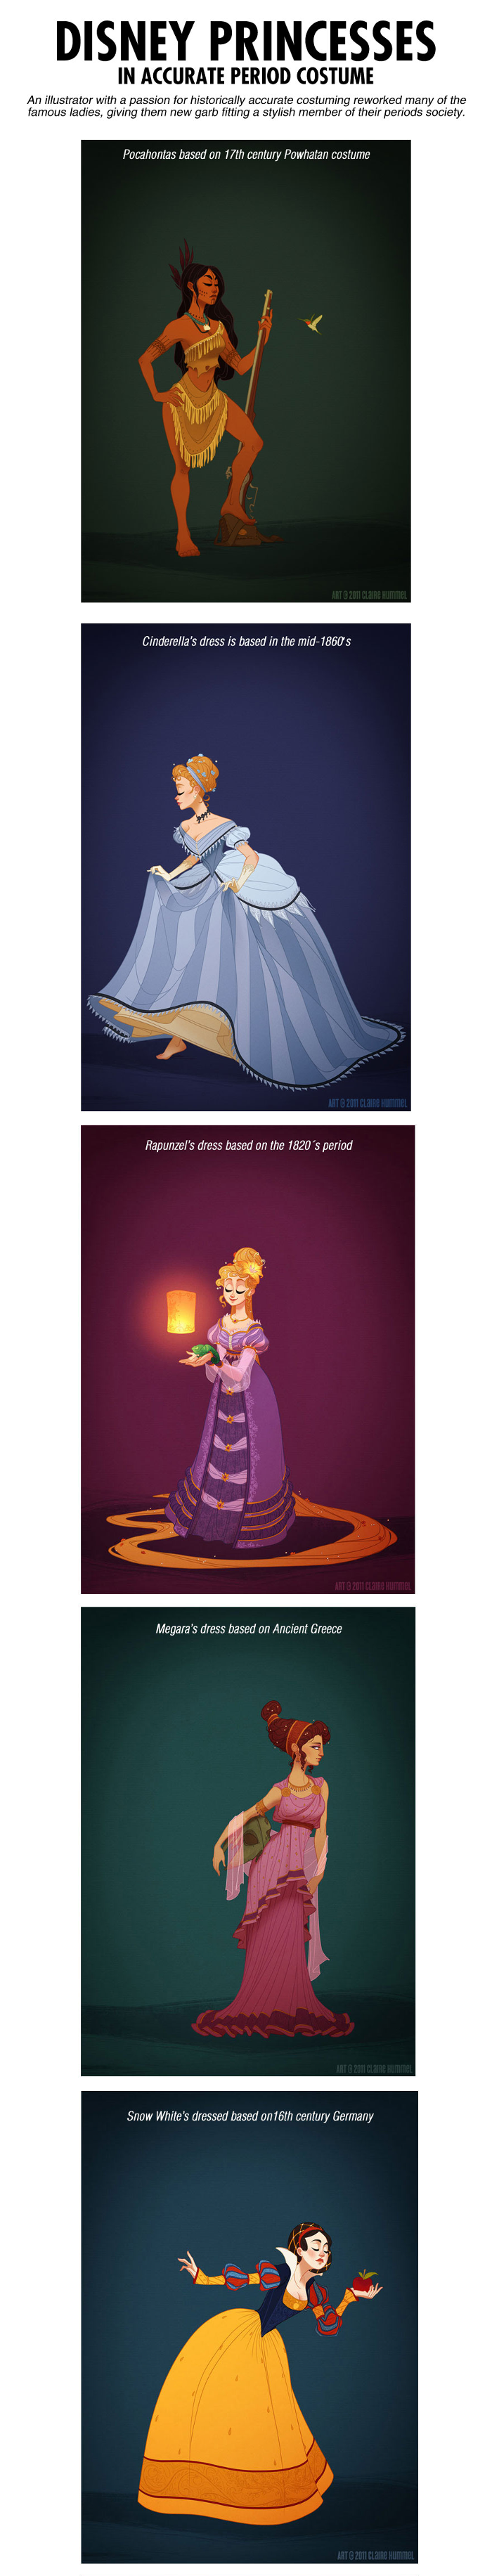 cool-Disney-princesses-period-costume-Pocahontas